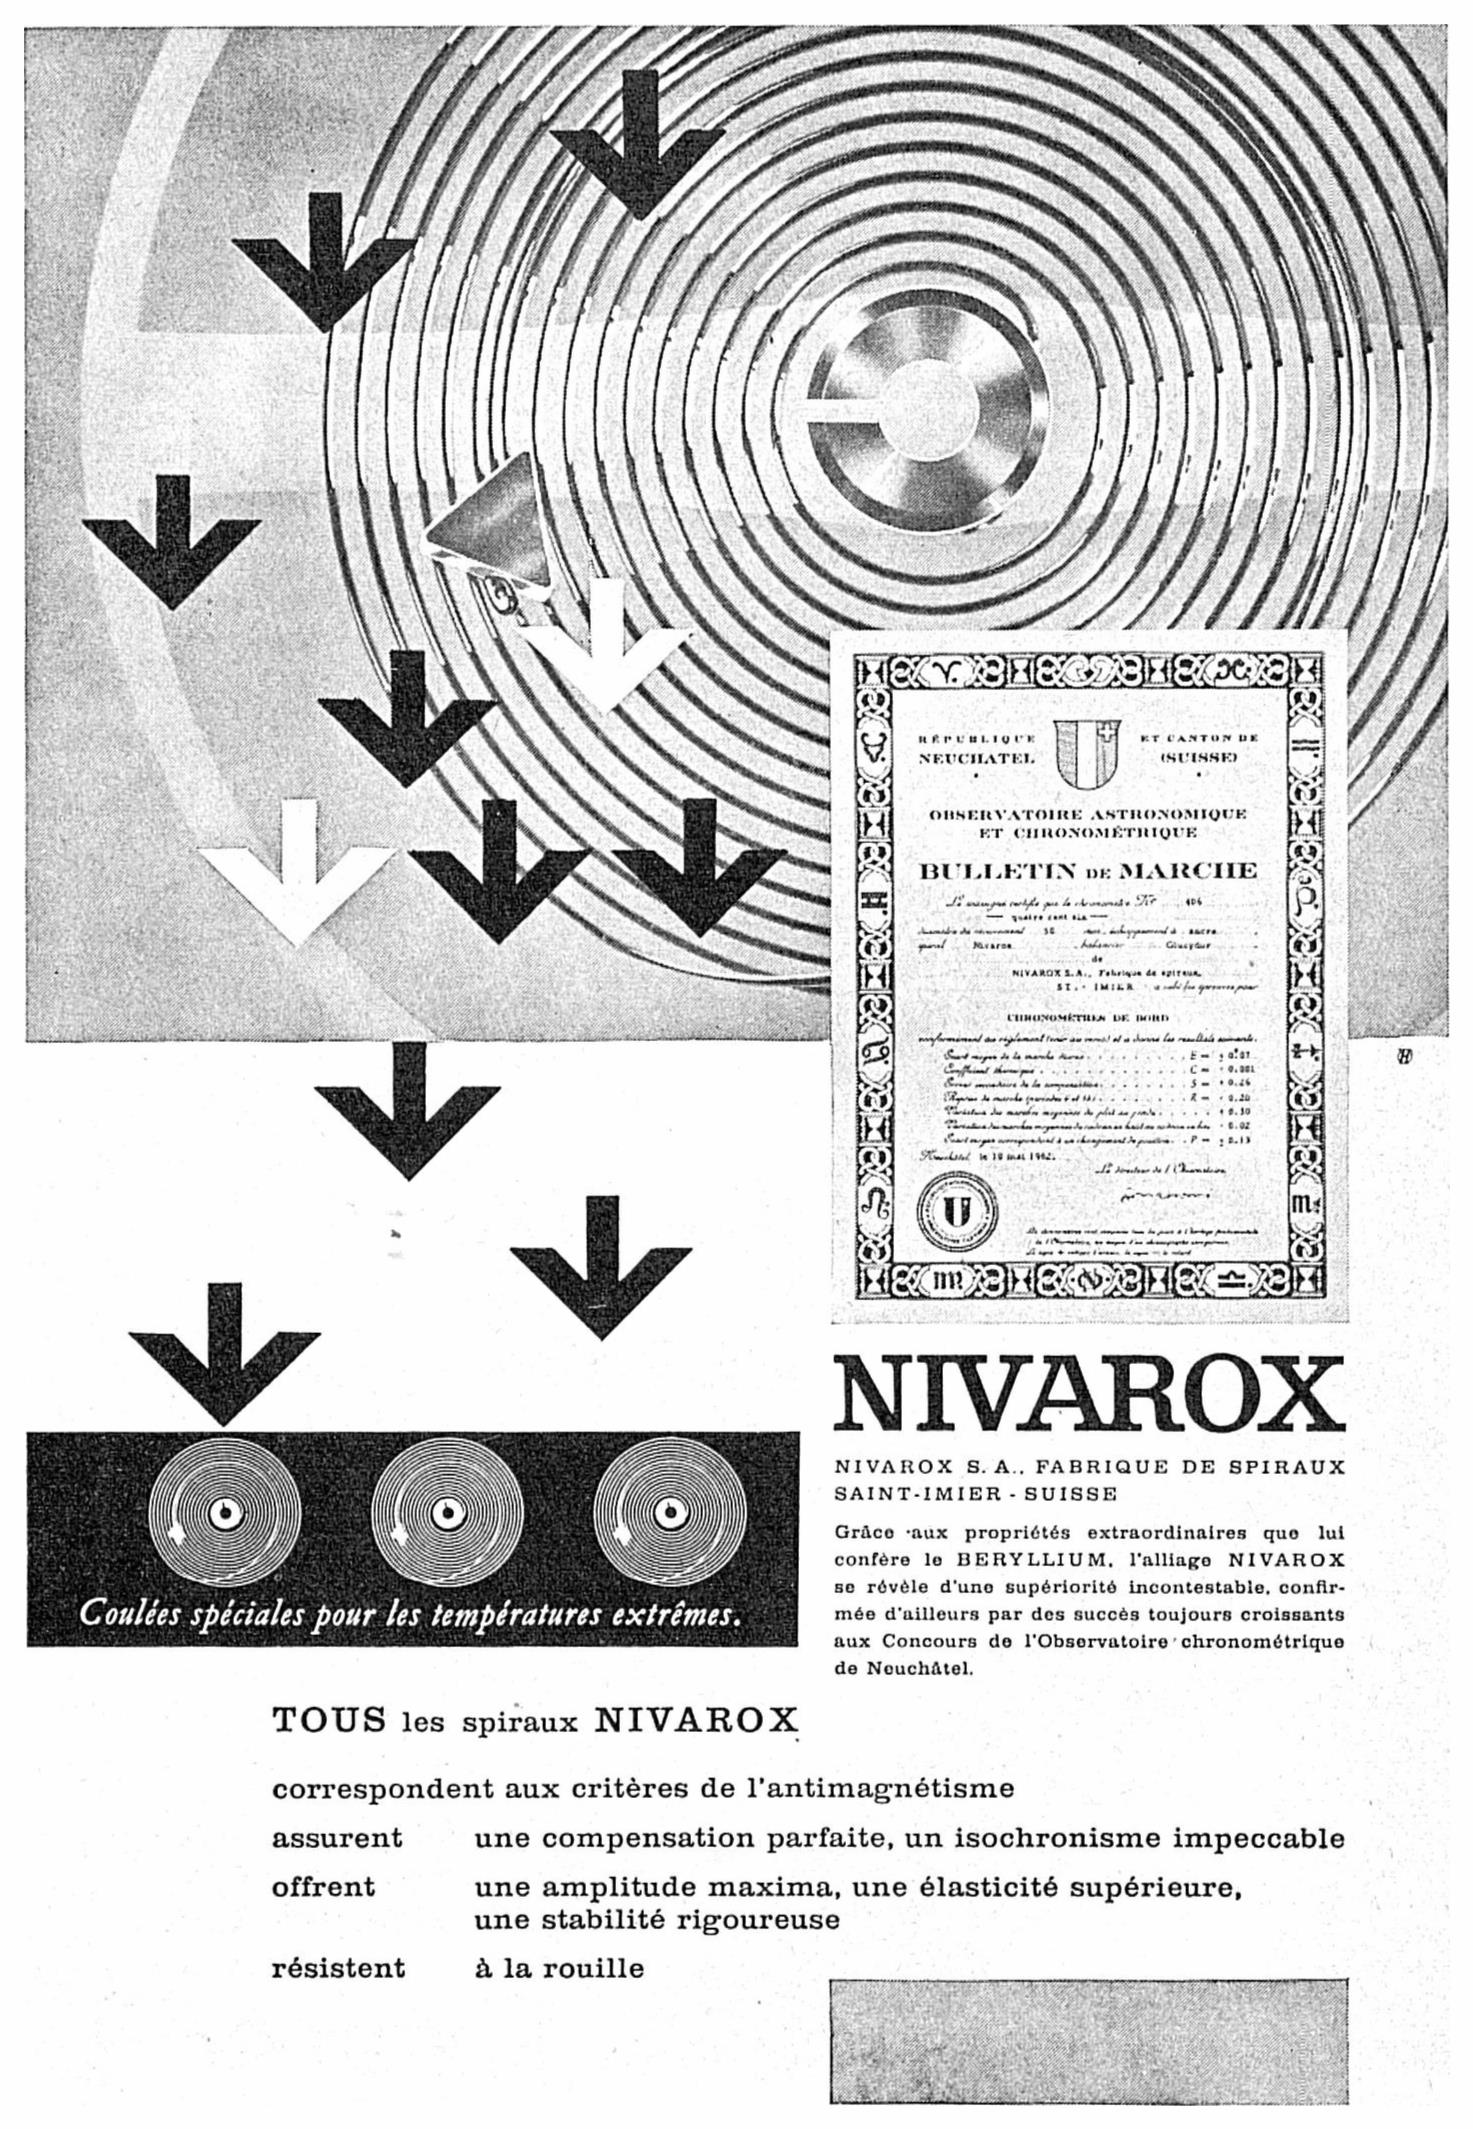 Nivarox 1971 20.jpg